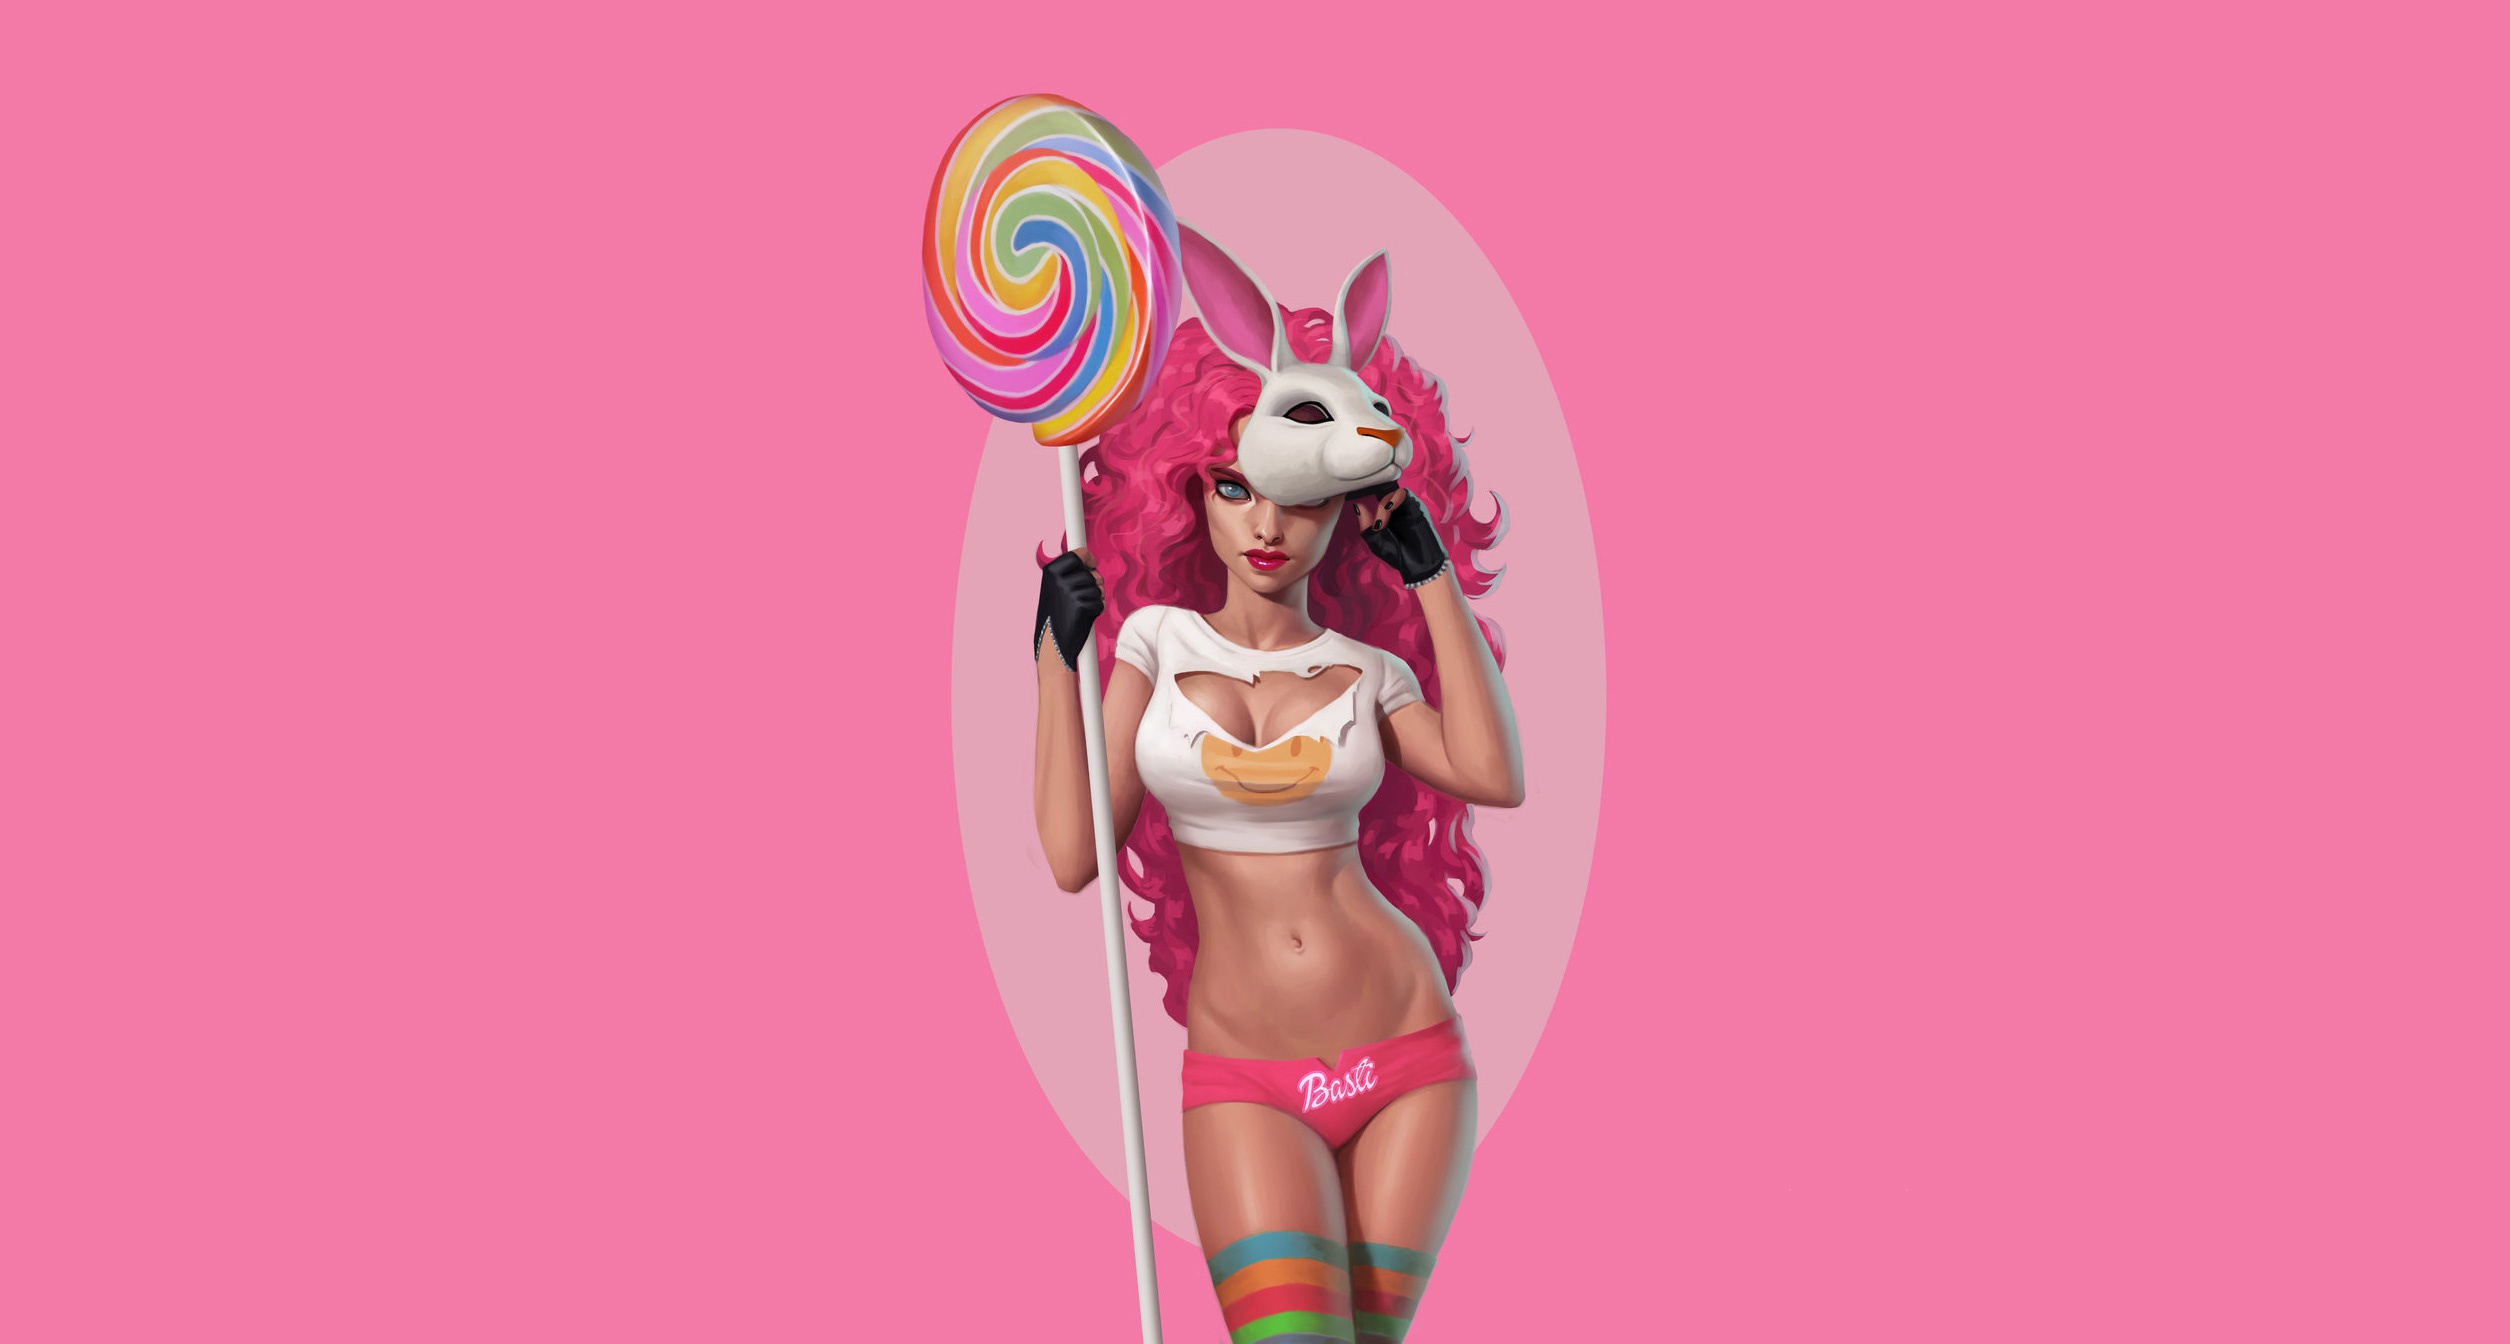 General 2510x1344 artwork women mask panties pink hair rabbits pink background simple background digital art